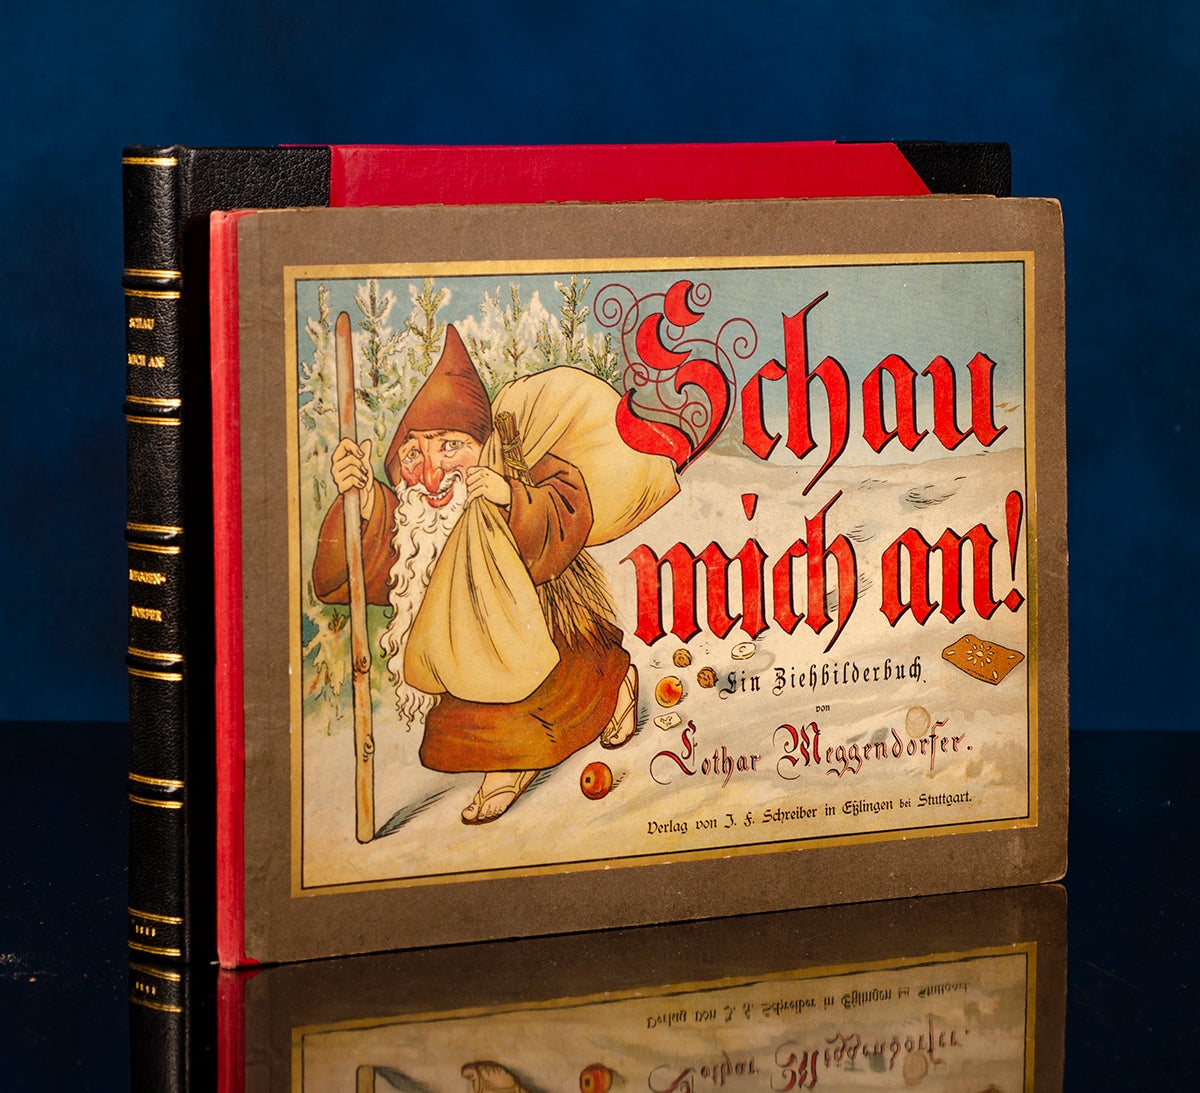 MOVABLE BOOK; MEGGENDORFER, Lothar - Schau Mich an! [Look at Me!]